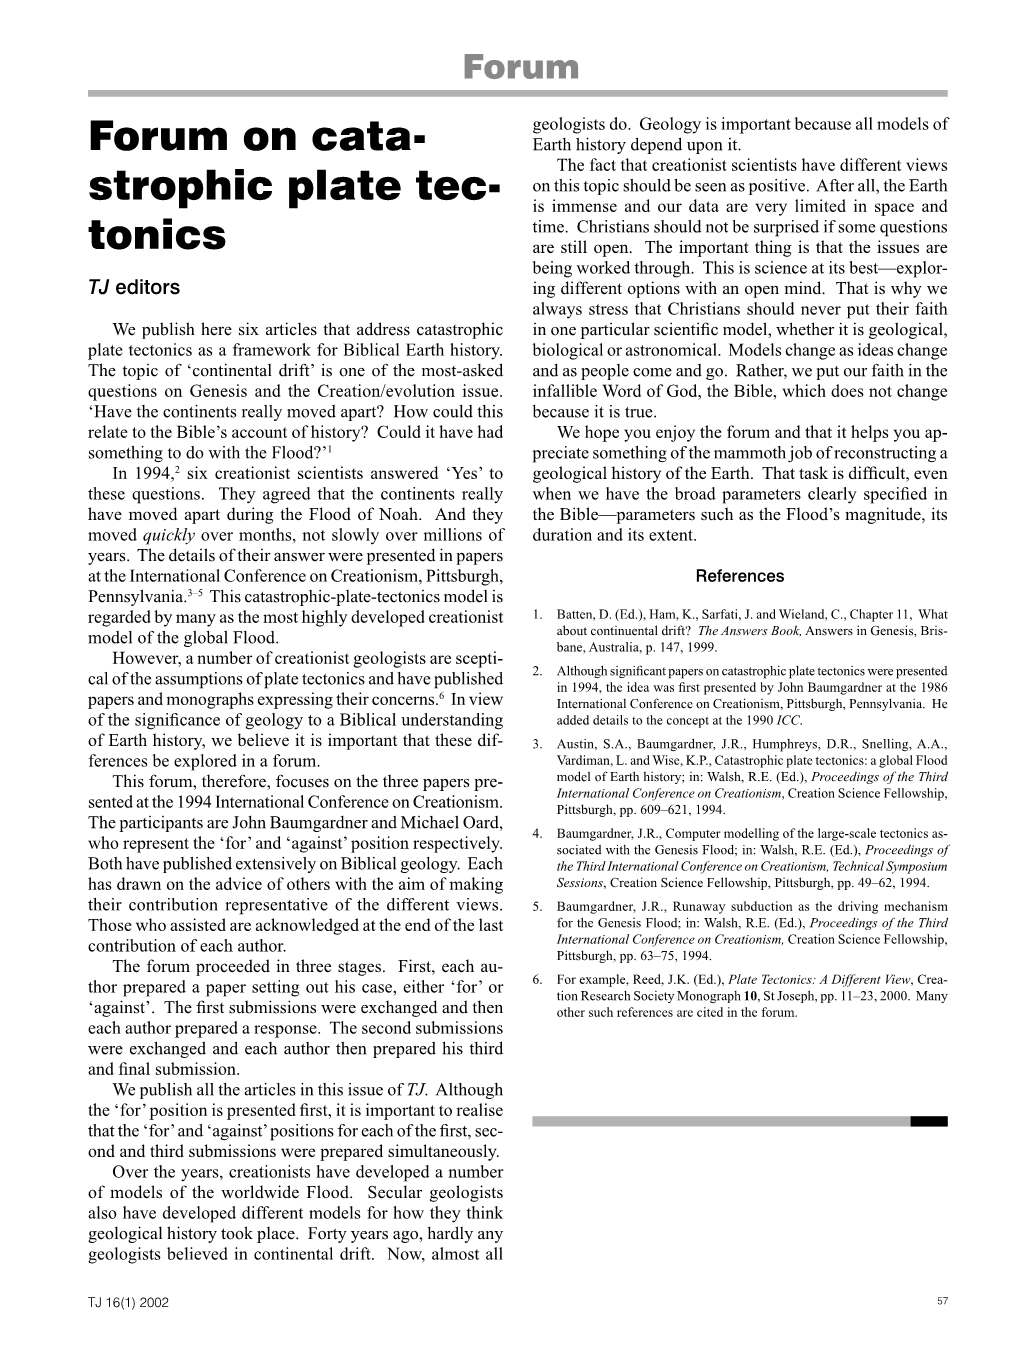 Forum on Cata- Strophic Plate Tec- Tonics